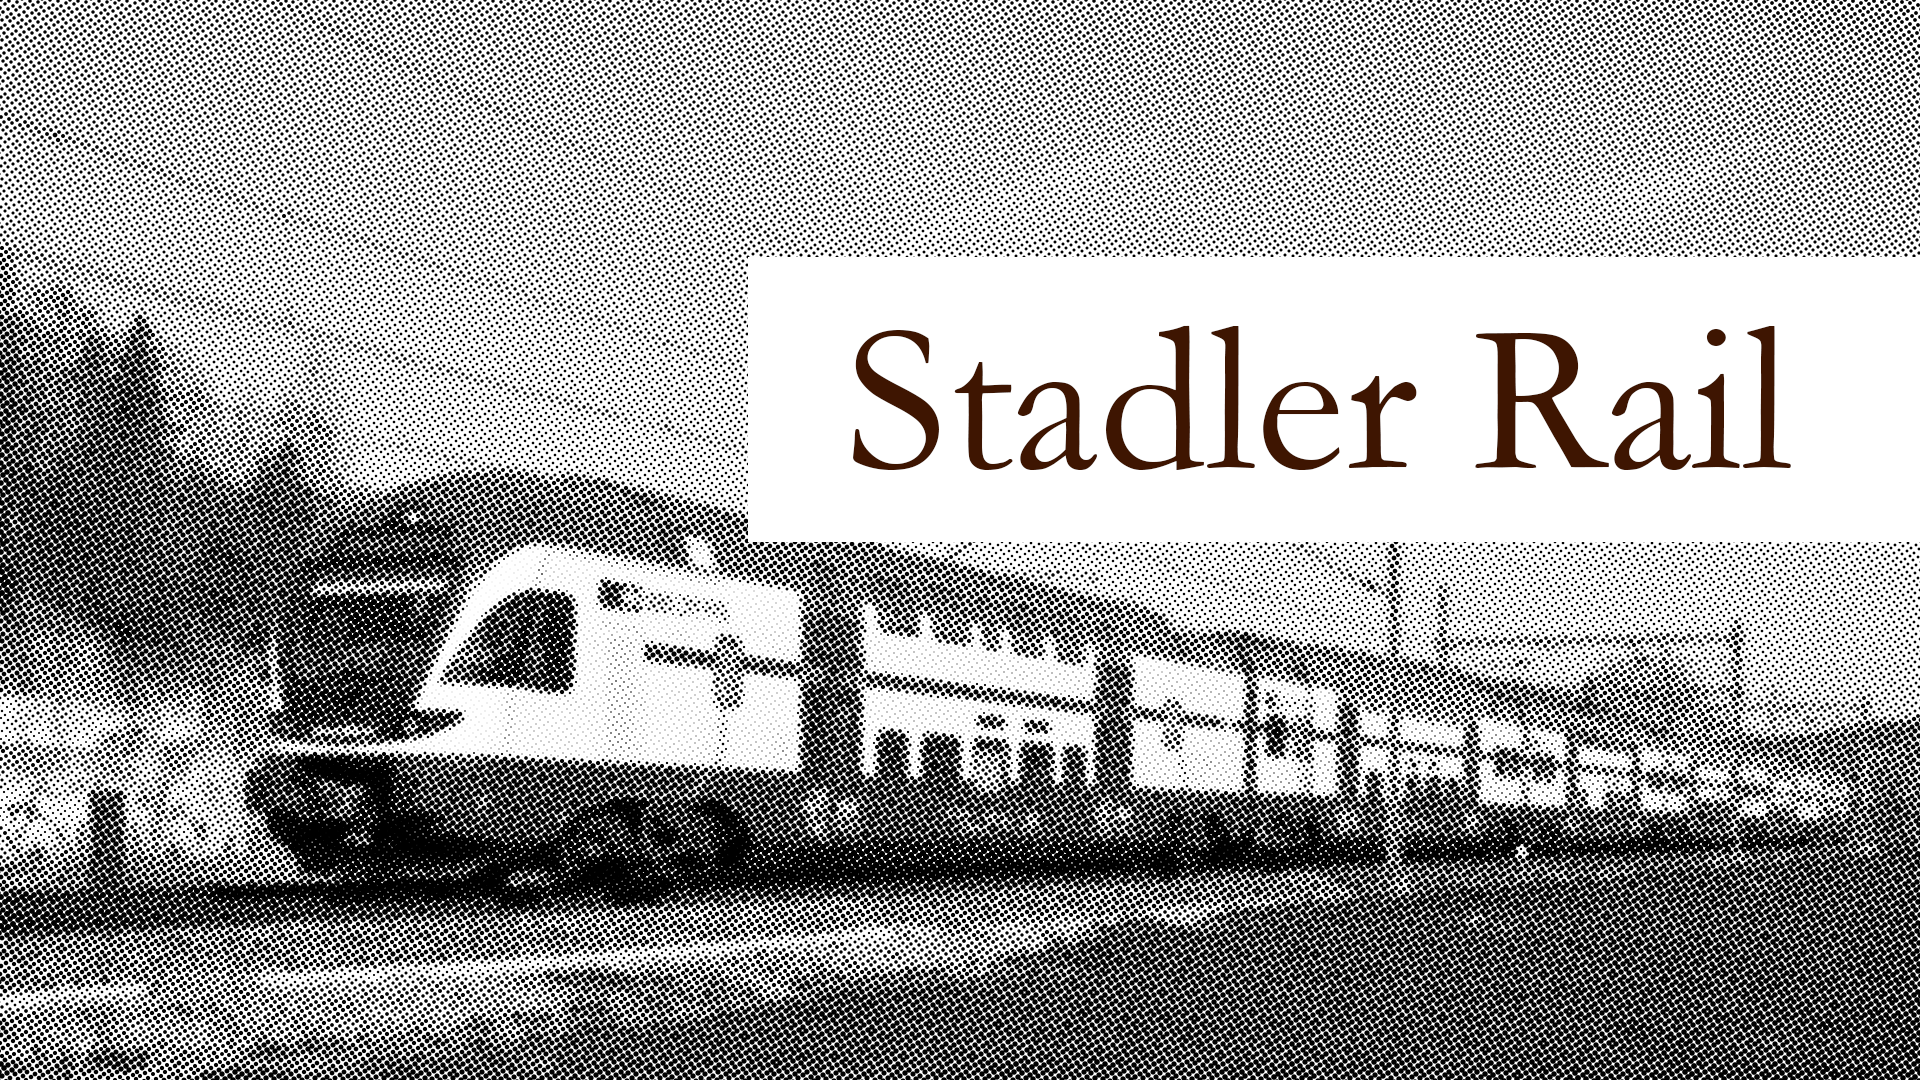 Stadler Rail for the proven quality on the European railways